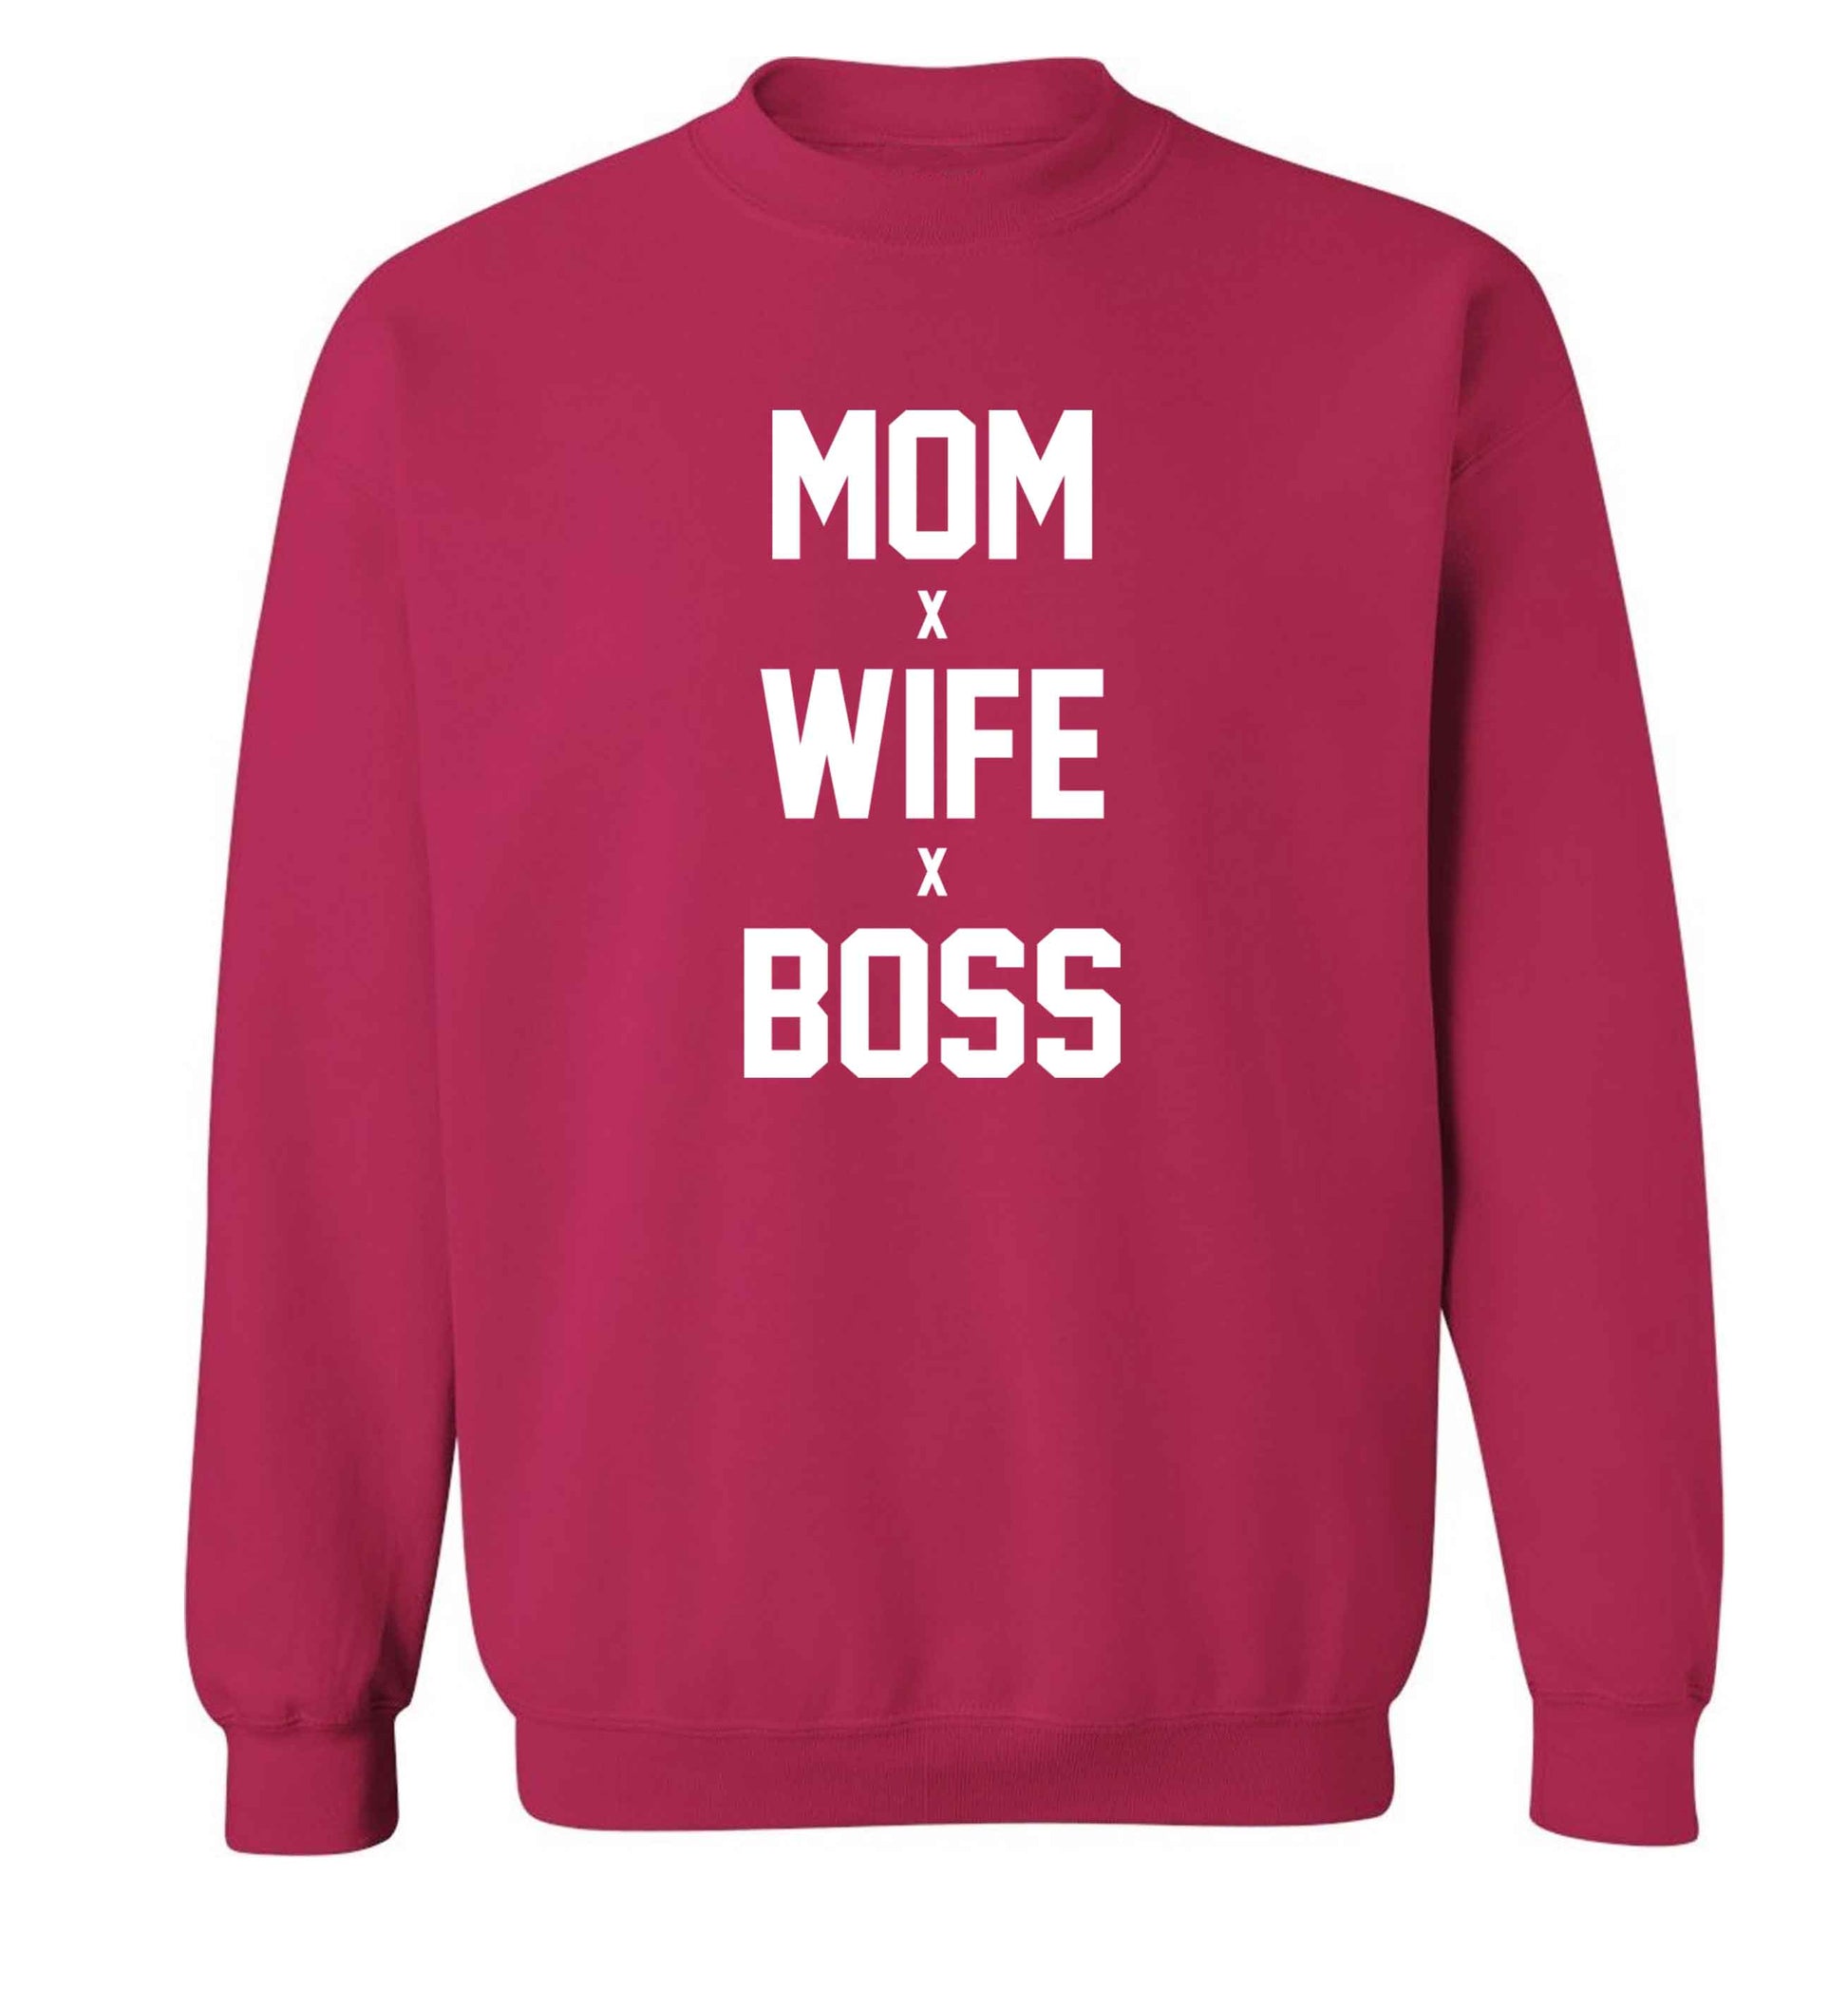 Mum wife boss adult's unisex pink sweater 2XL